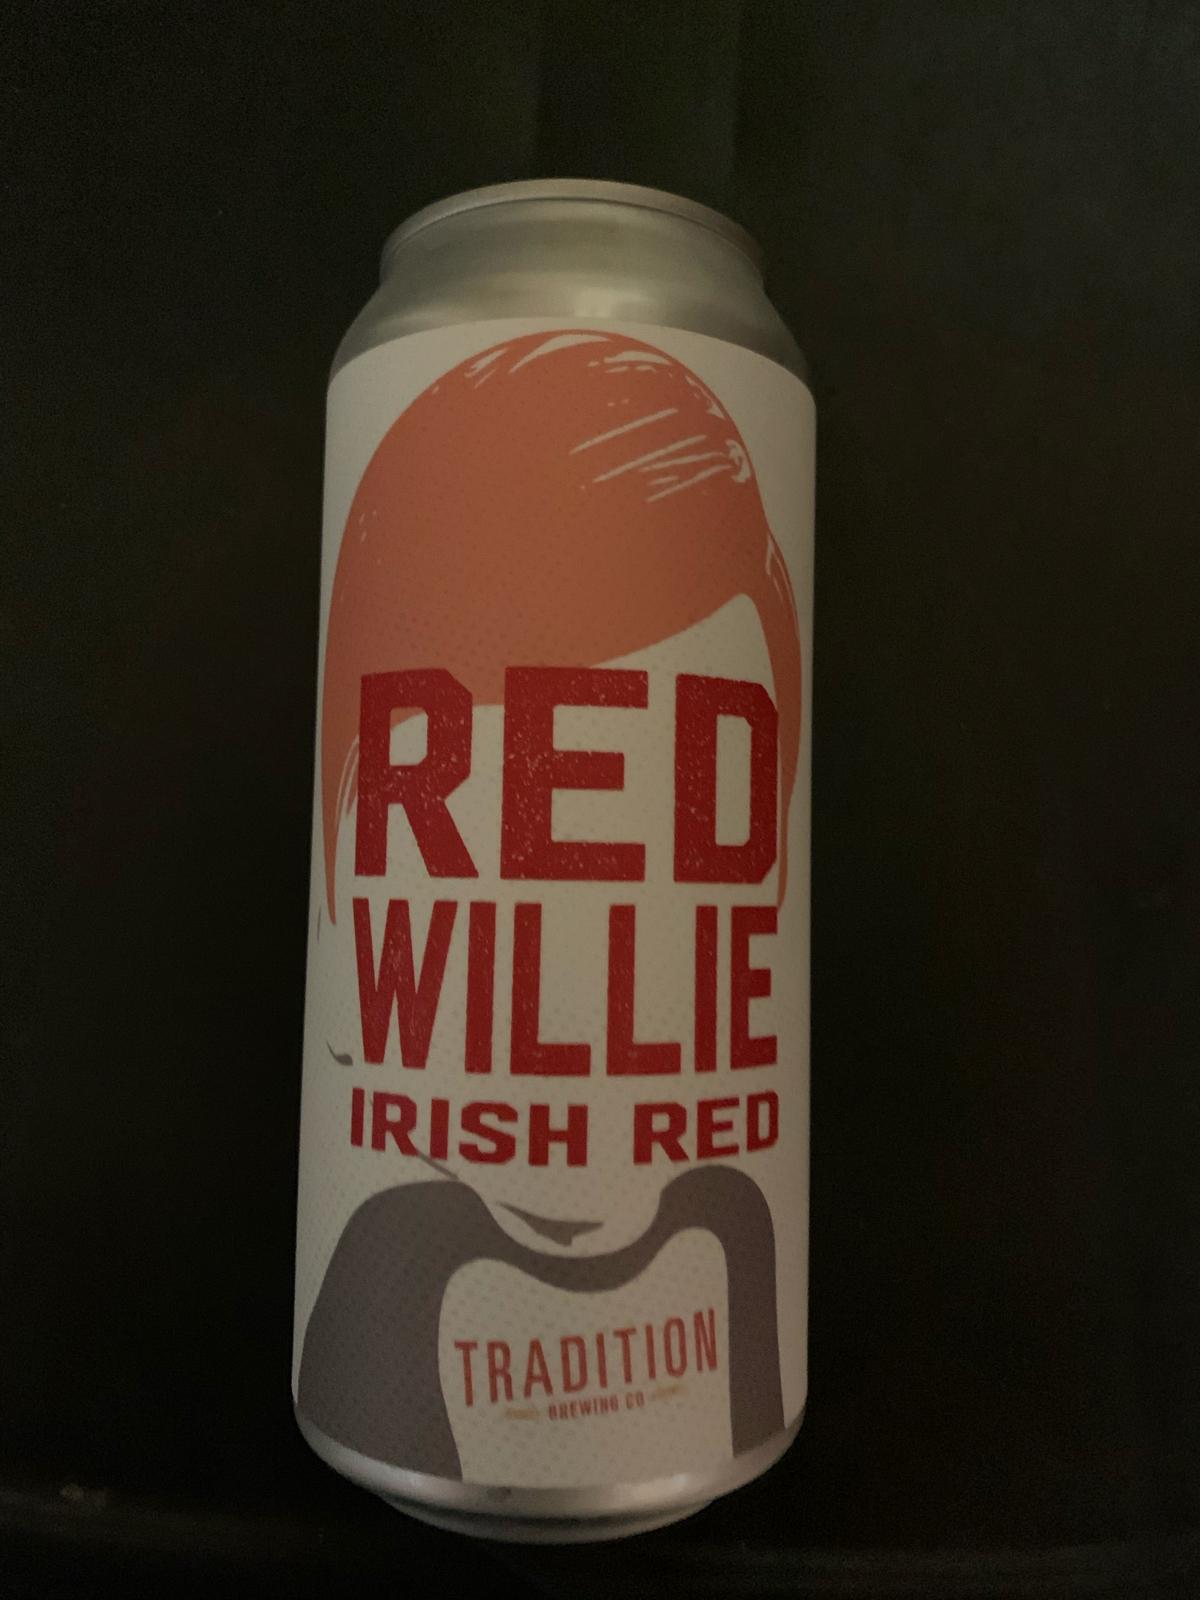 Red Willie